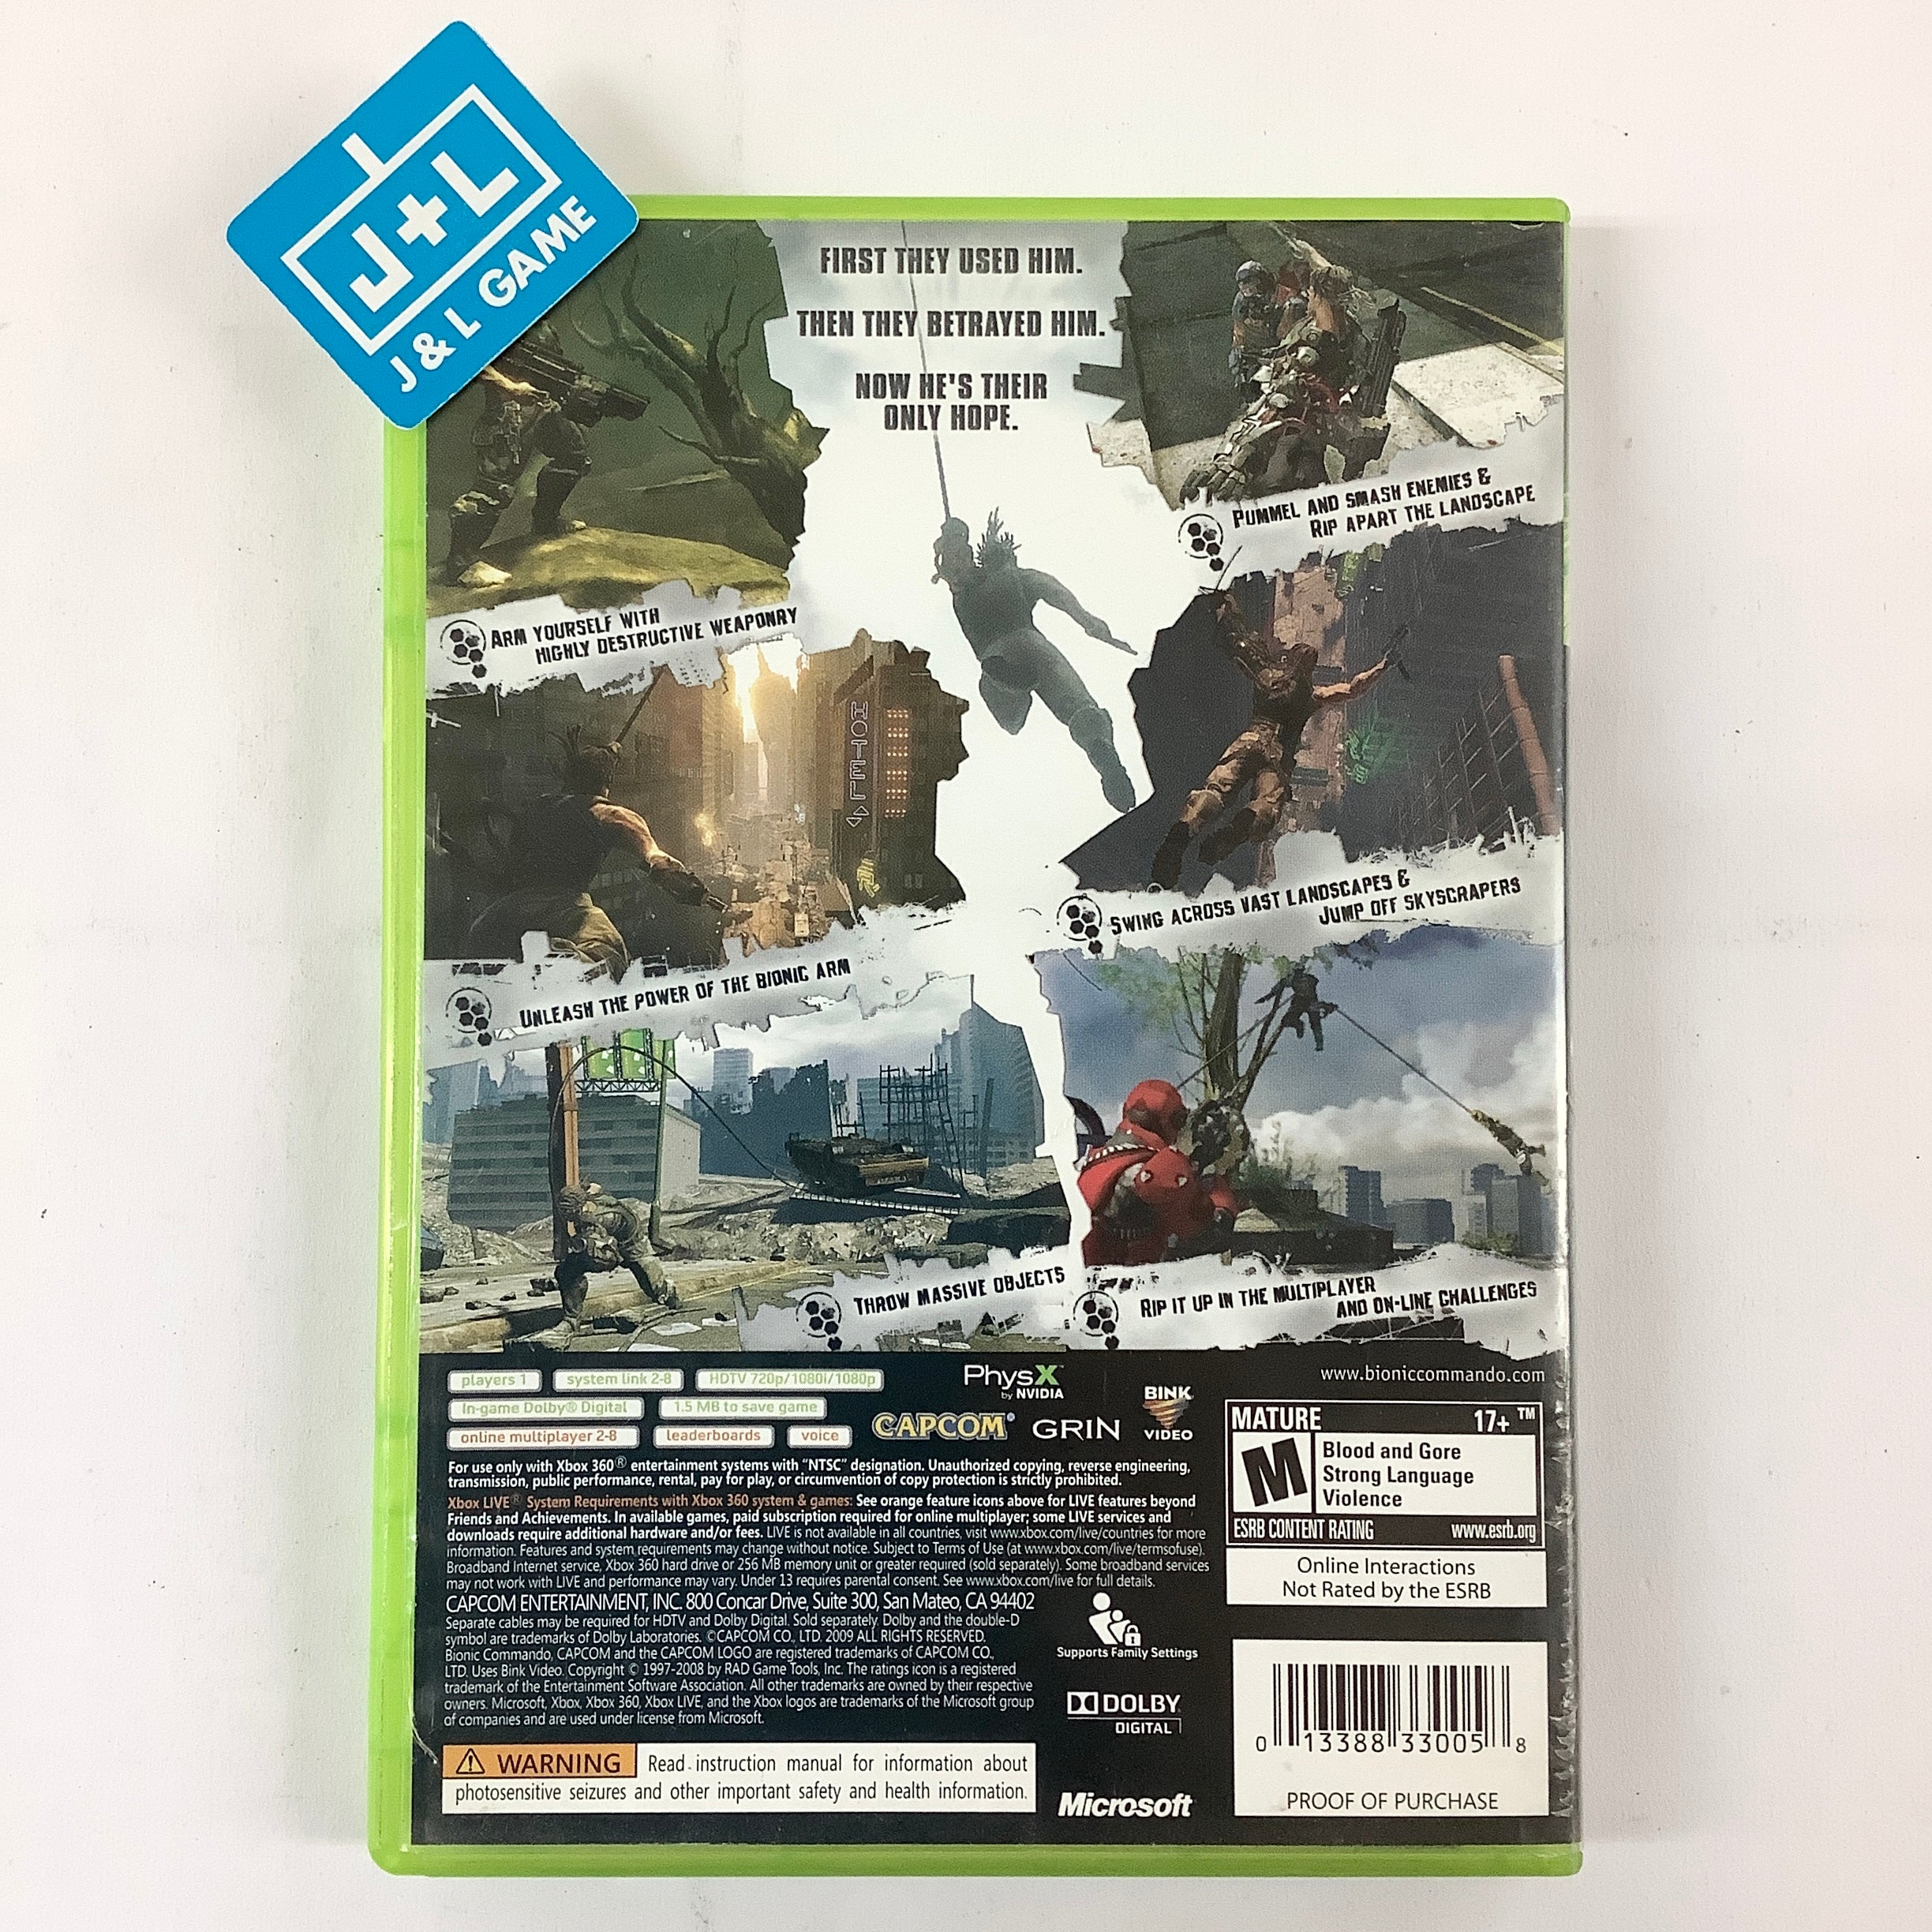 Bionic Commando - Xbox 360 [Pre-Owned] Video Games Capcom   